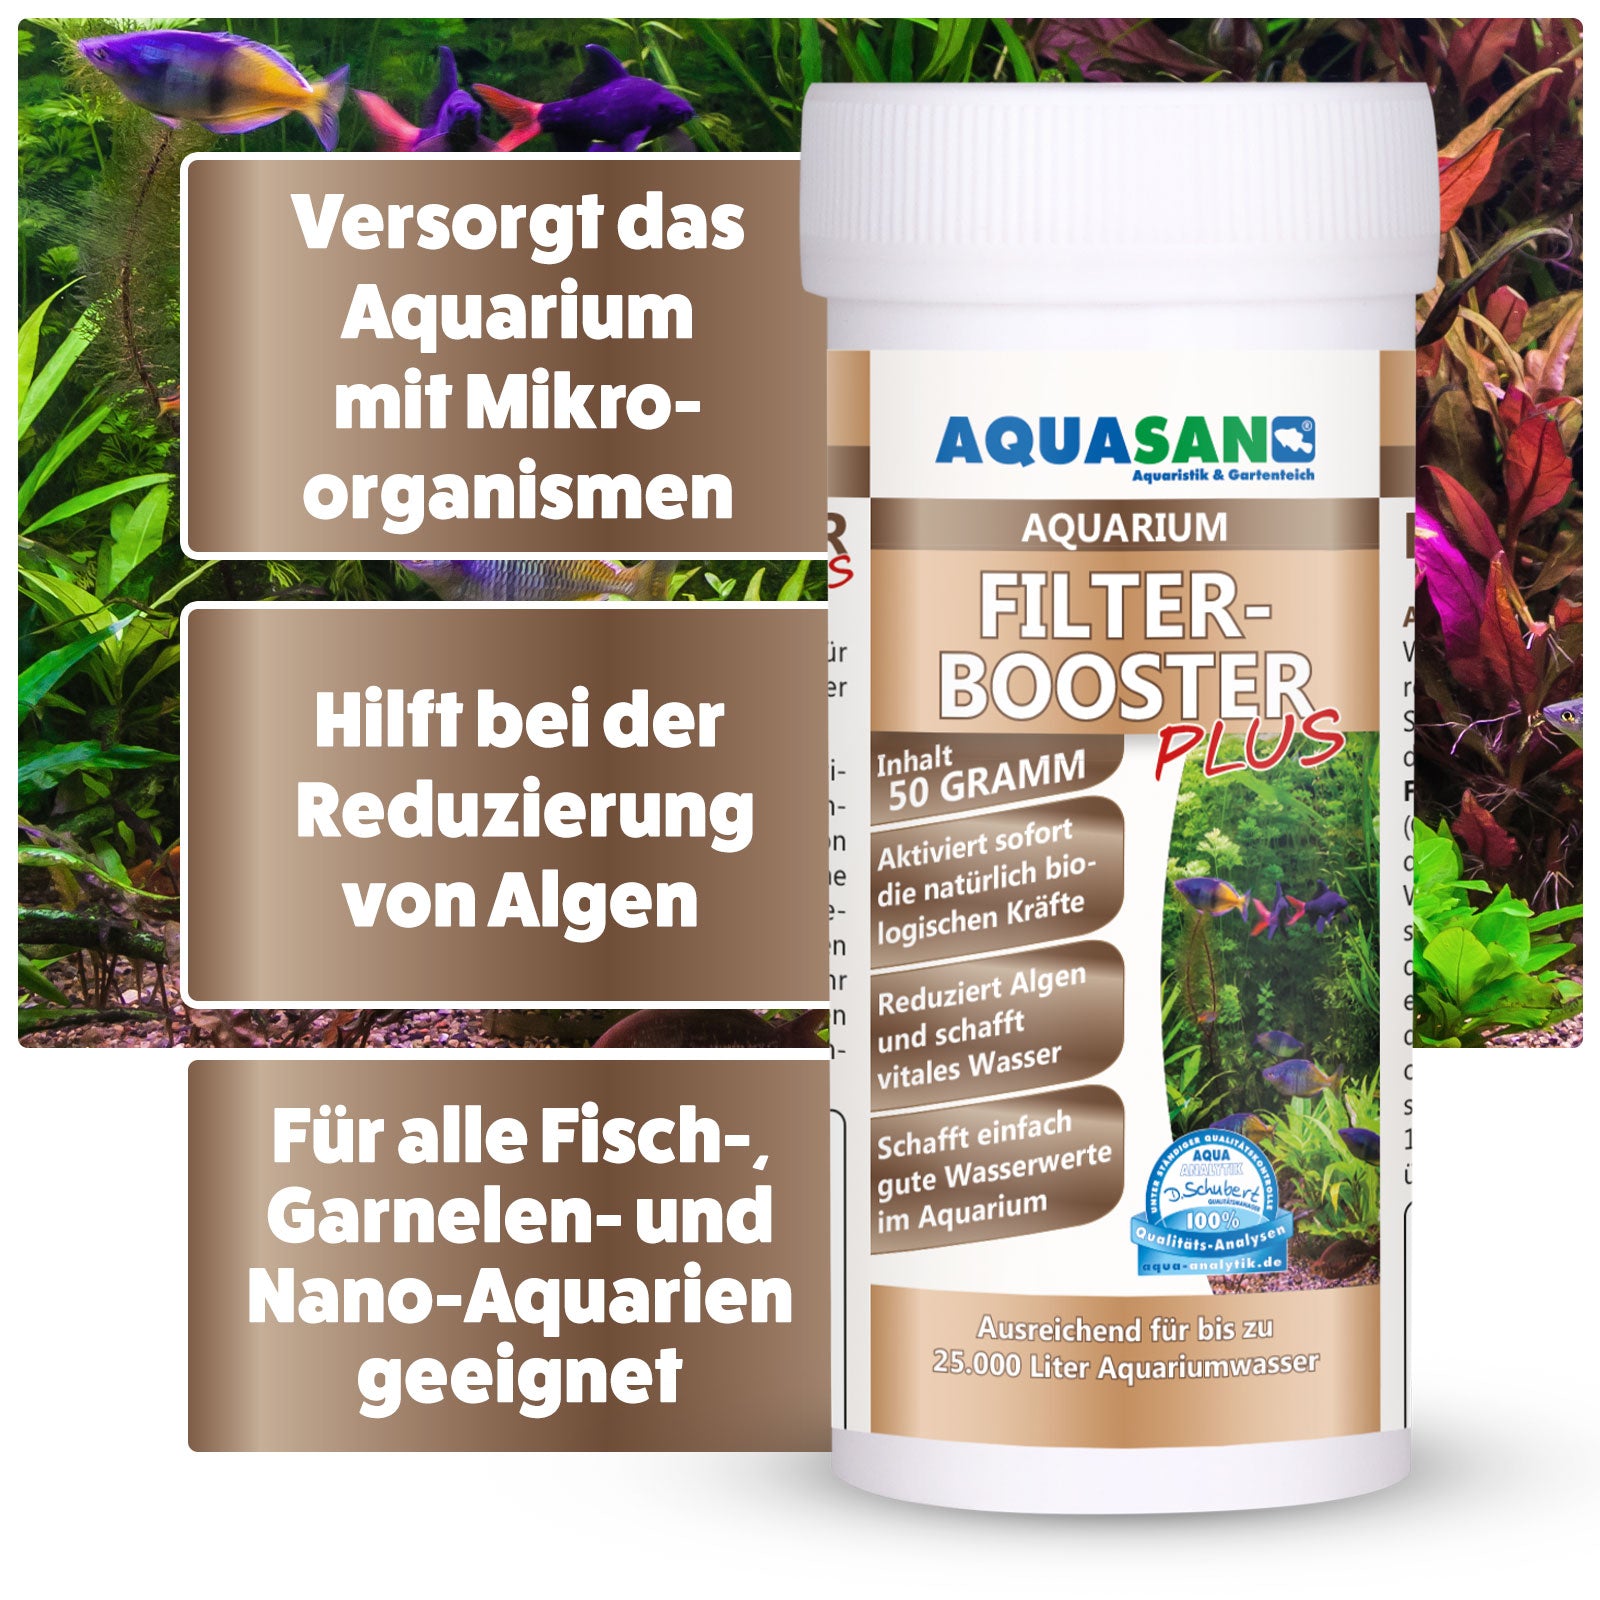 AQUASAN FilterBooster PLUS für Aquarien